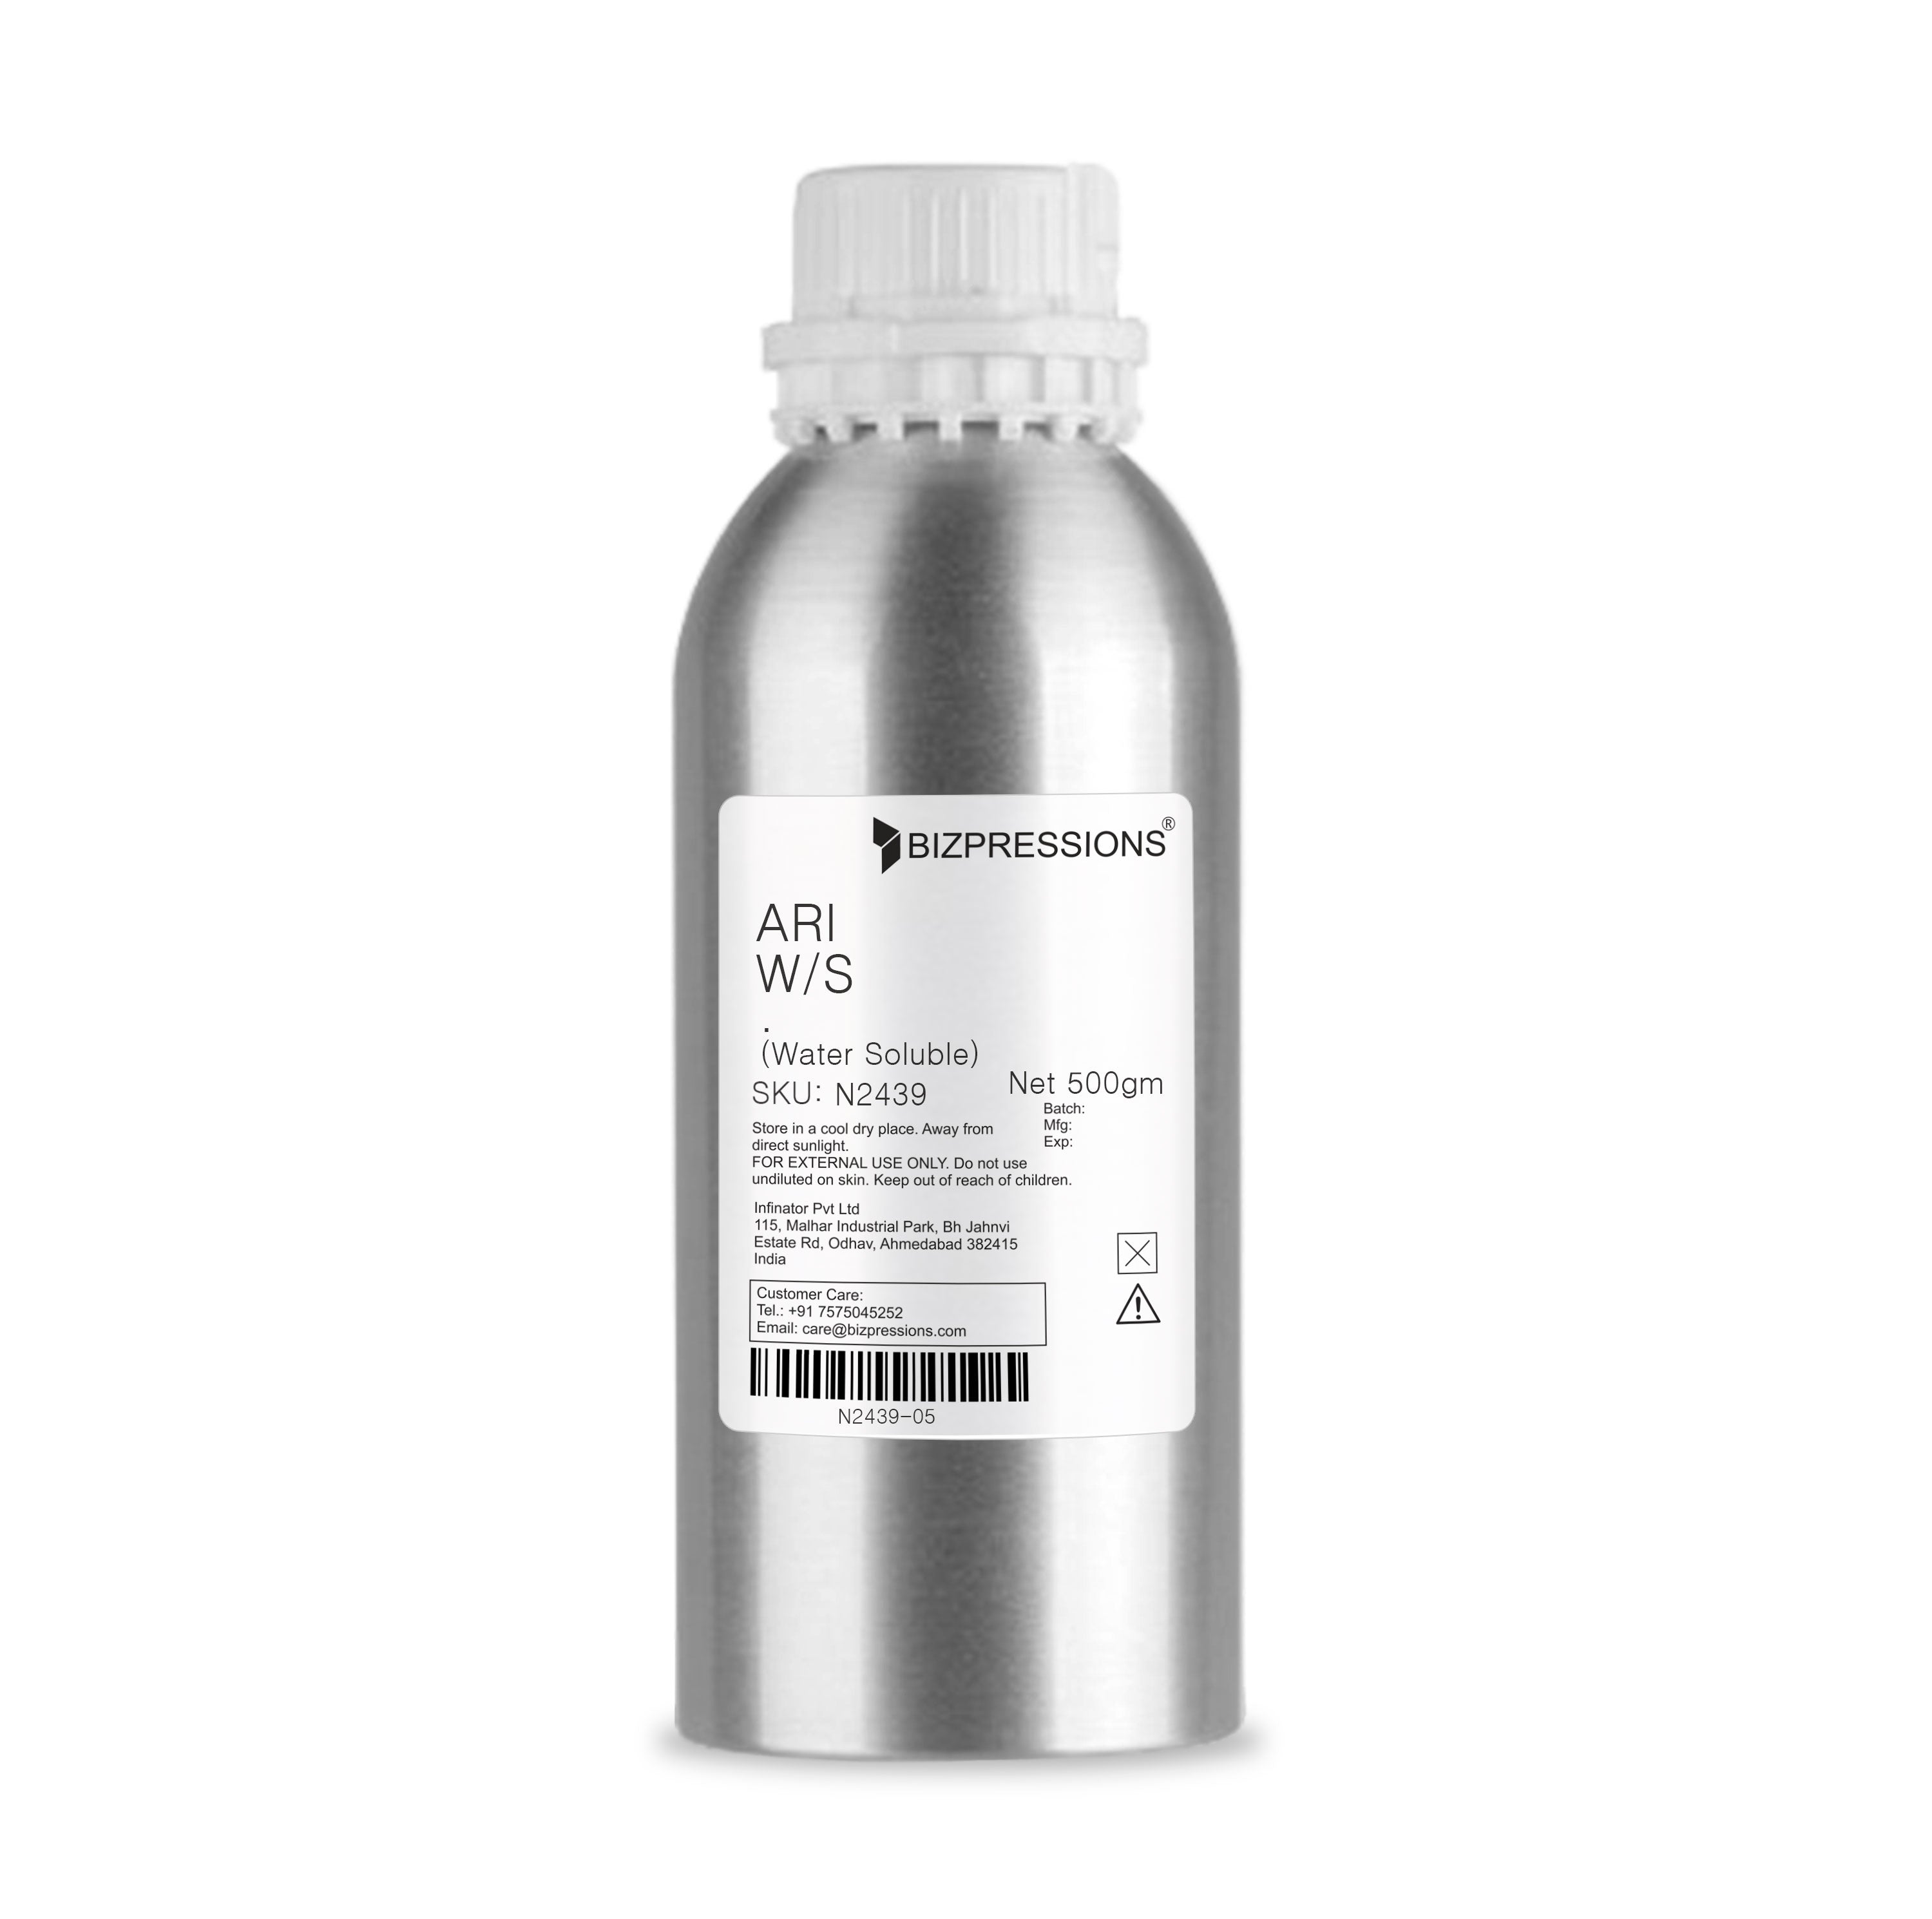 ARI W/S - Fragrance (Water Soluble)